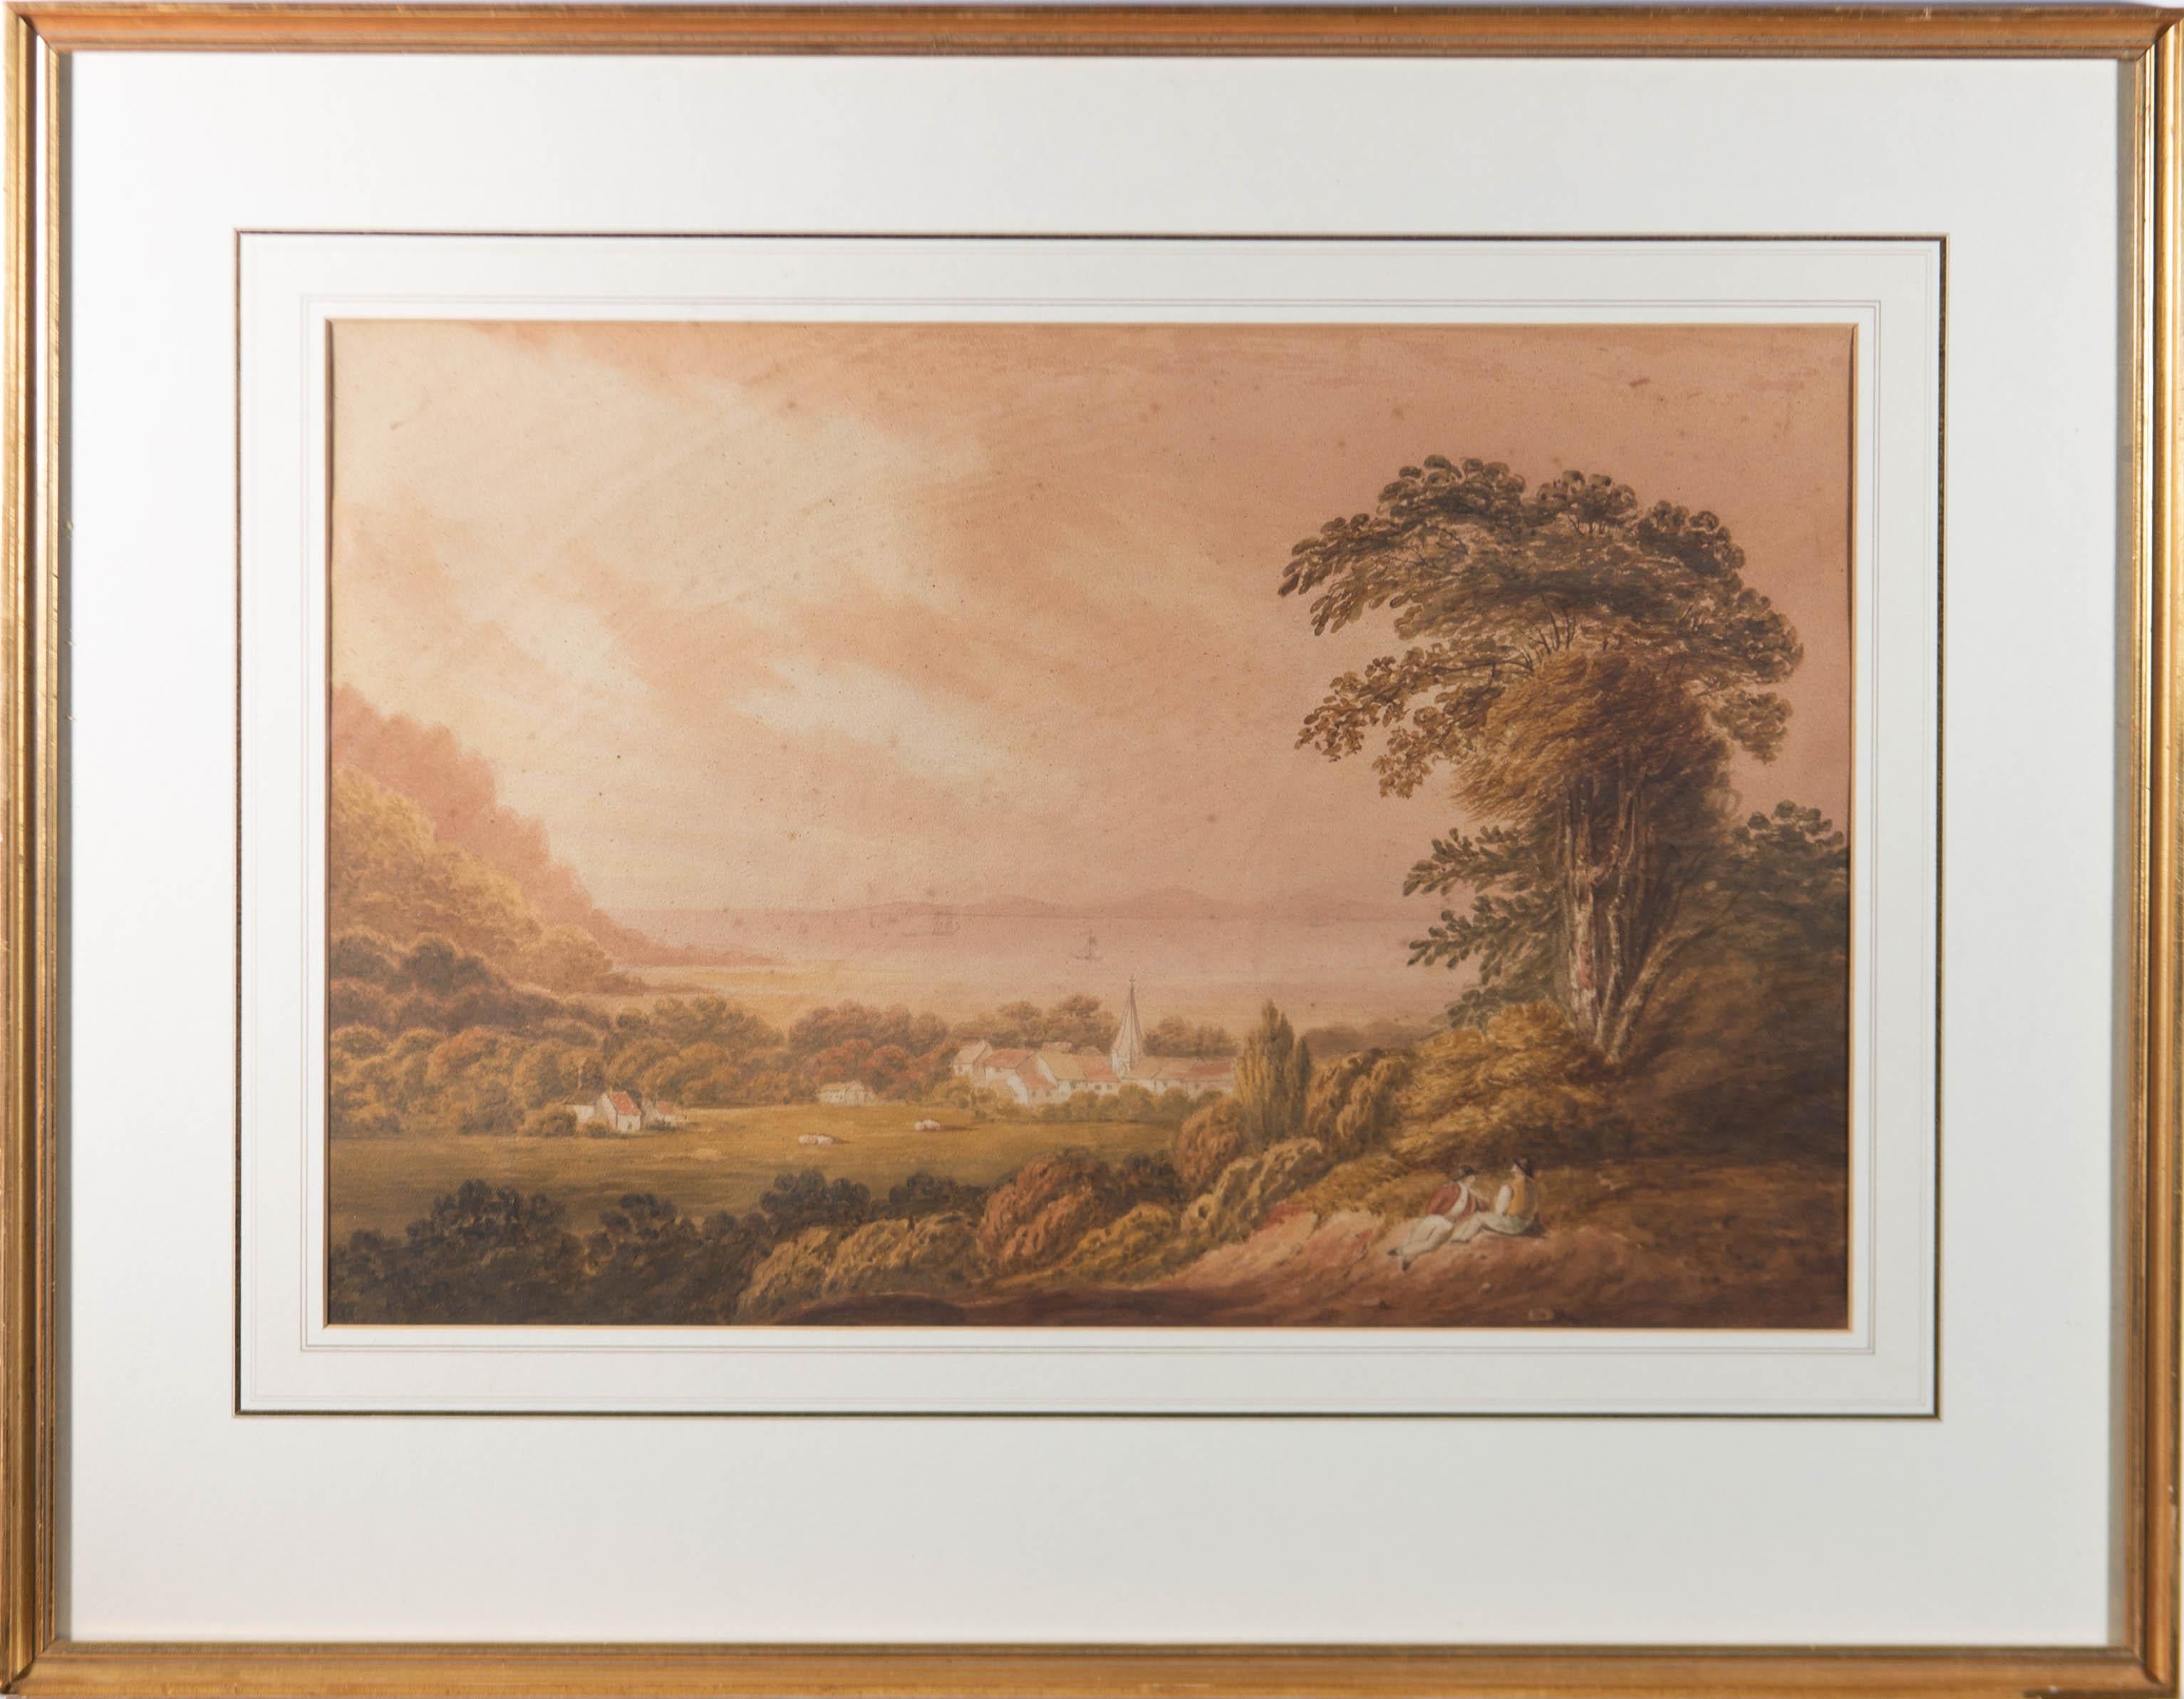 Unknown Landscape Art - H.B - Mid 19th Century Watercolour, Two Figures in a Landscape